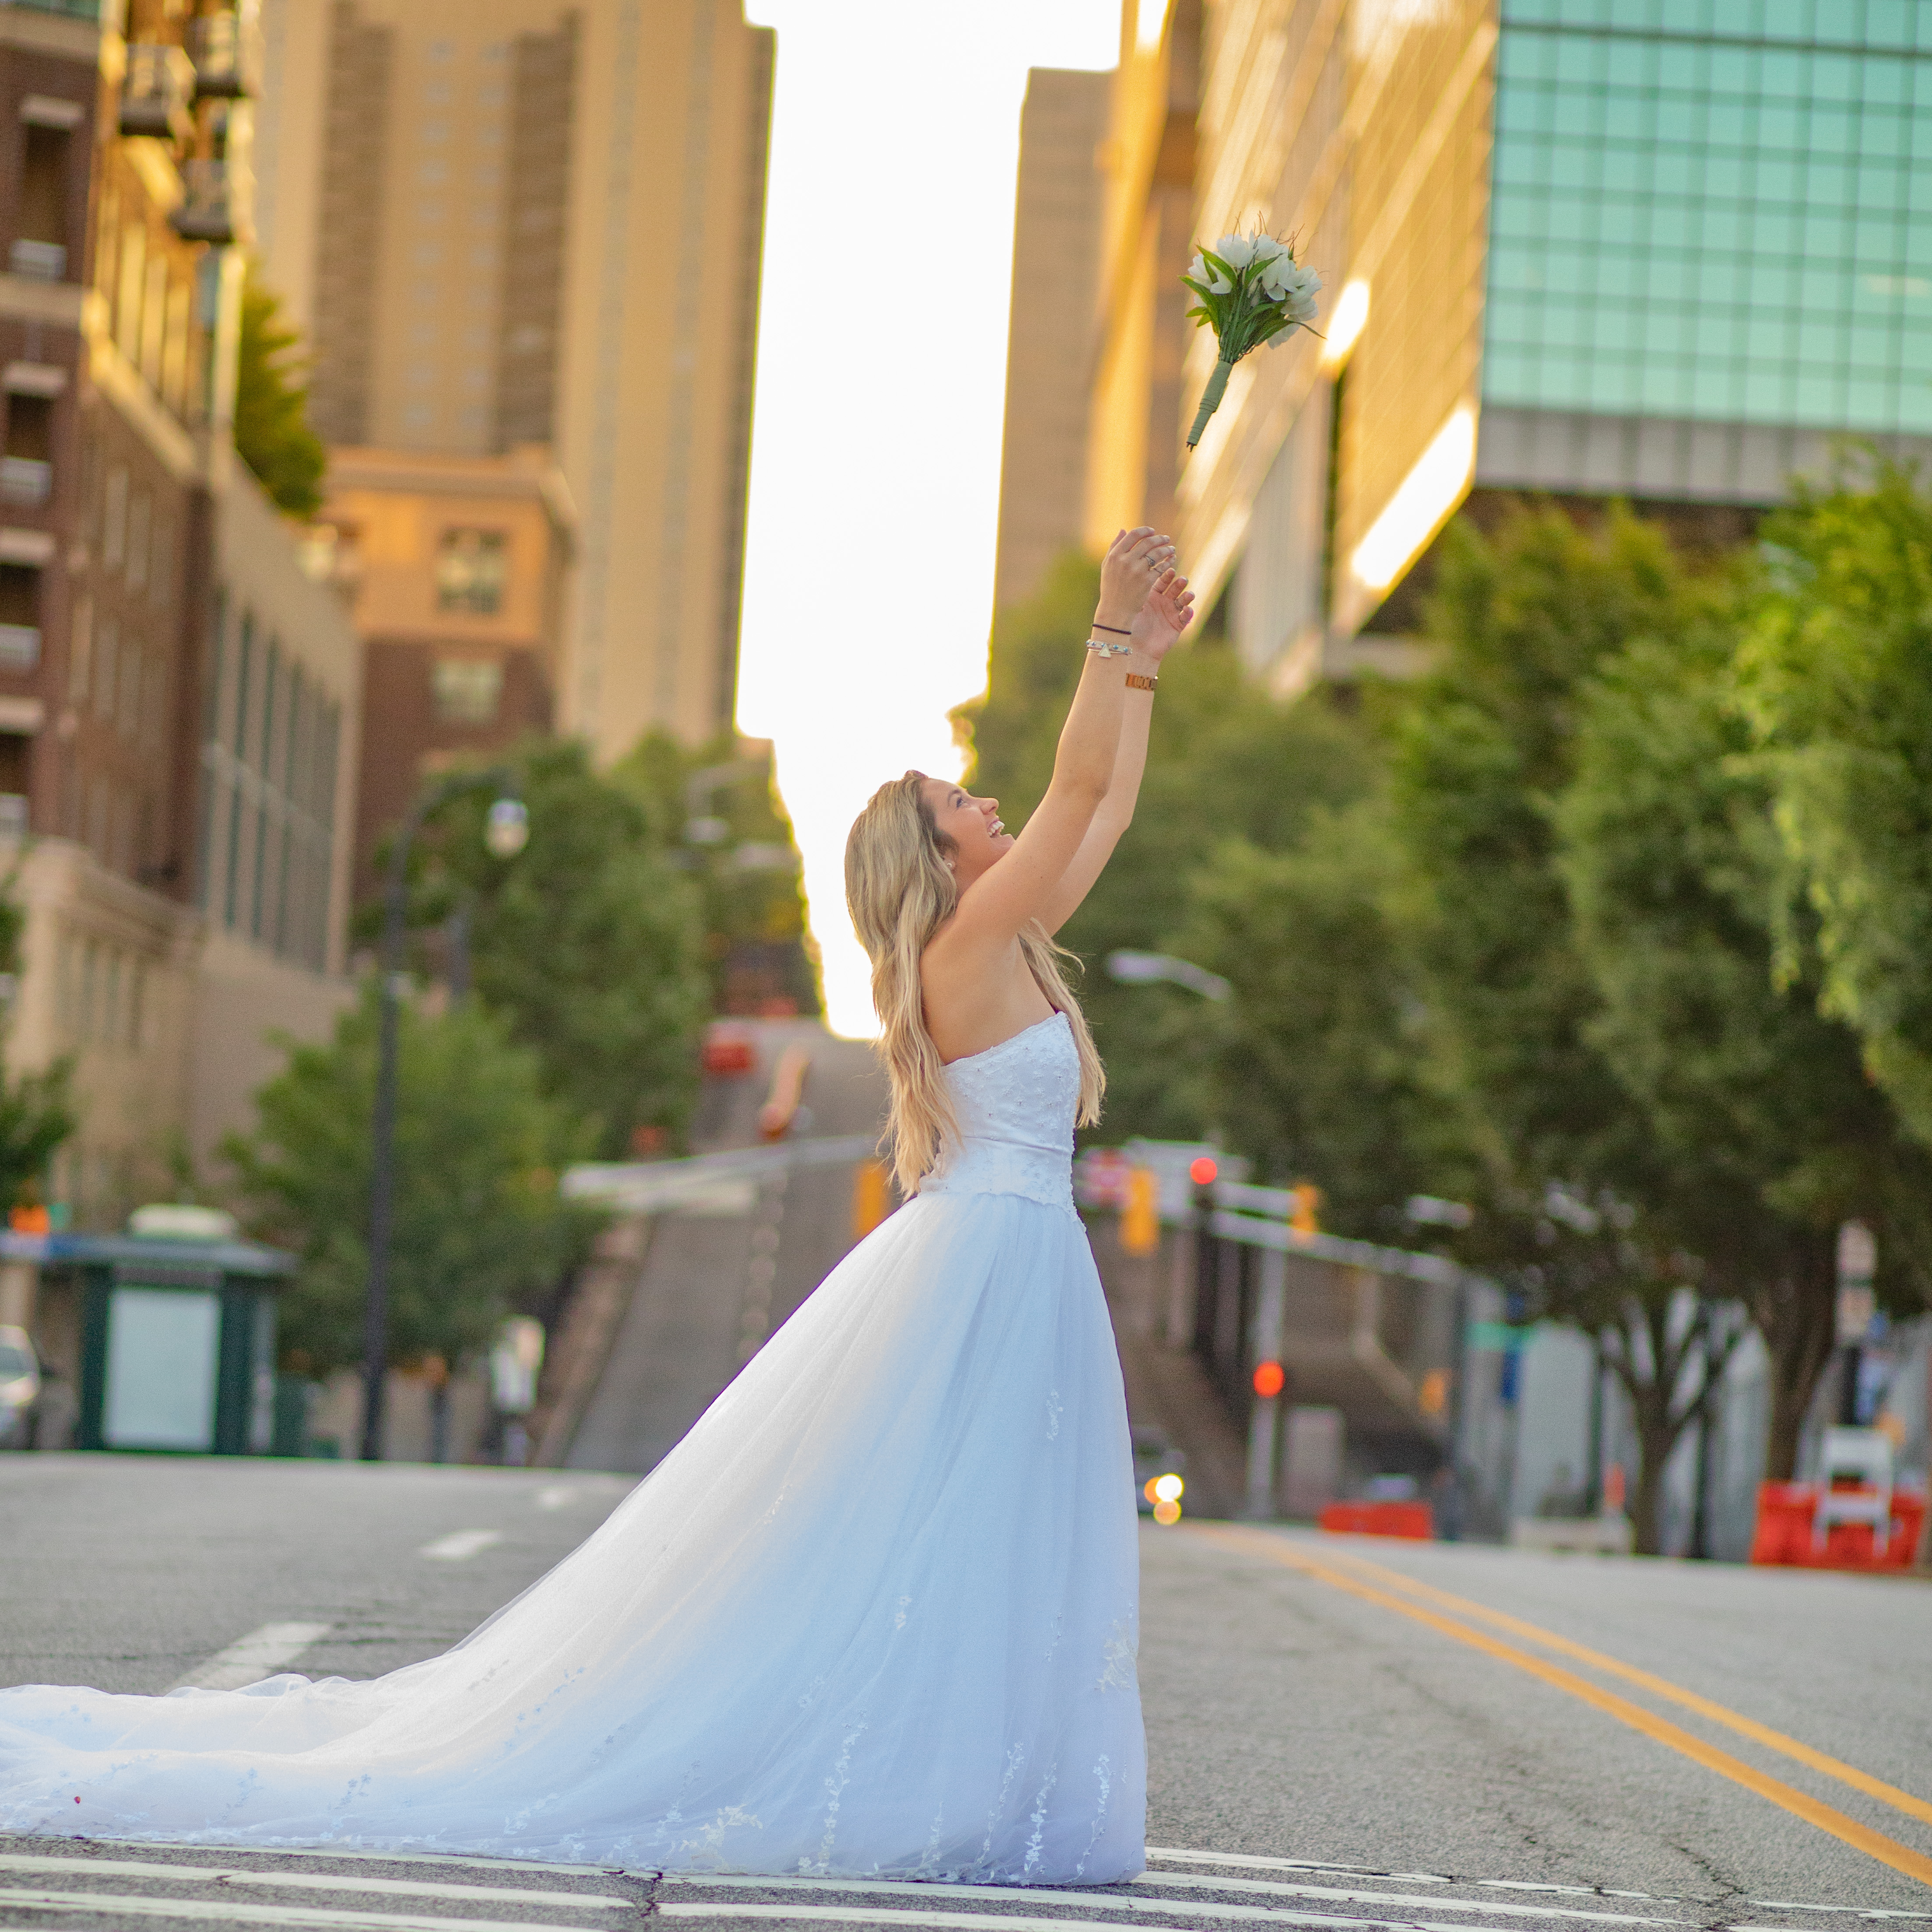 Photography by the Atlanta Wedding Photographers at AtlantaArtisticWeddings capture beautiful weddings and share wedding advice